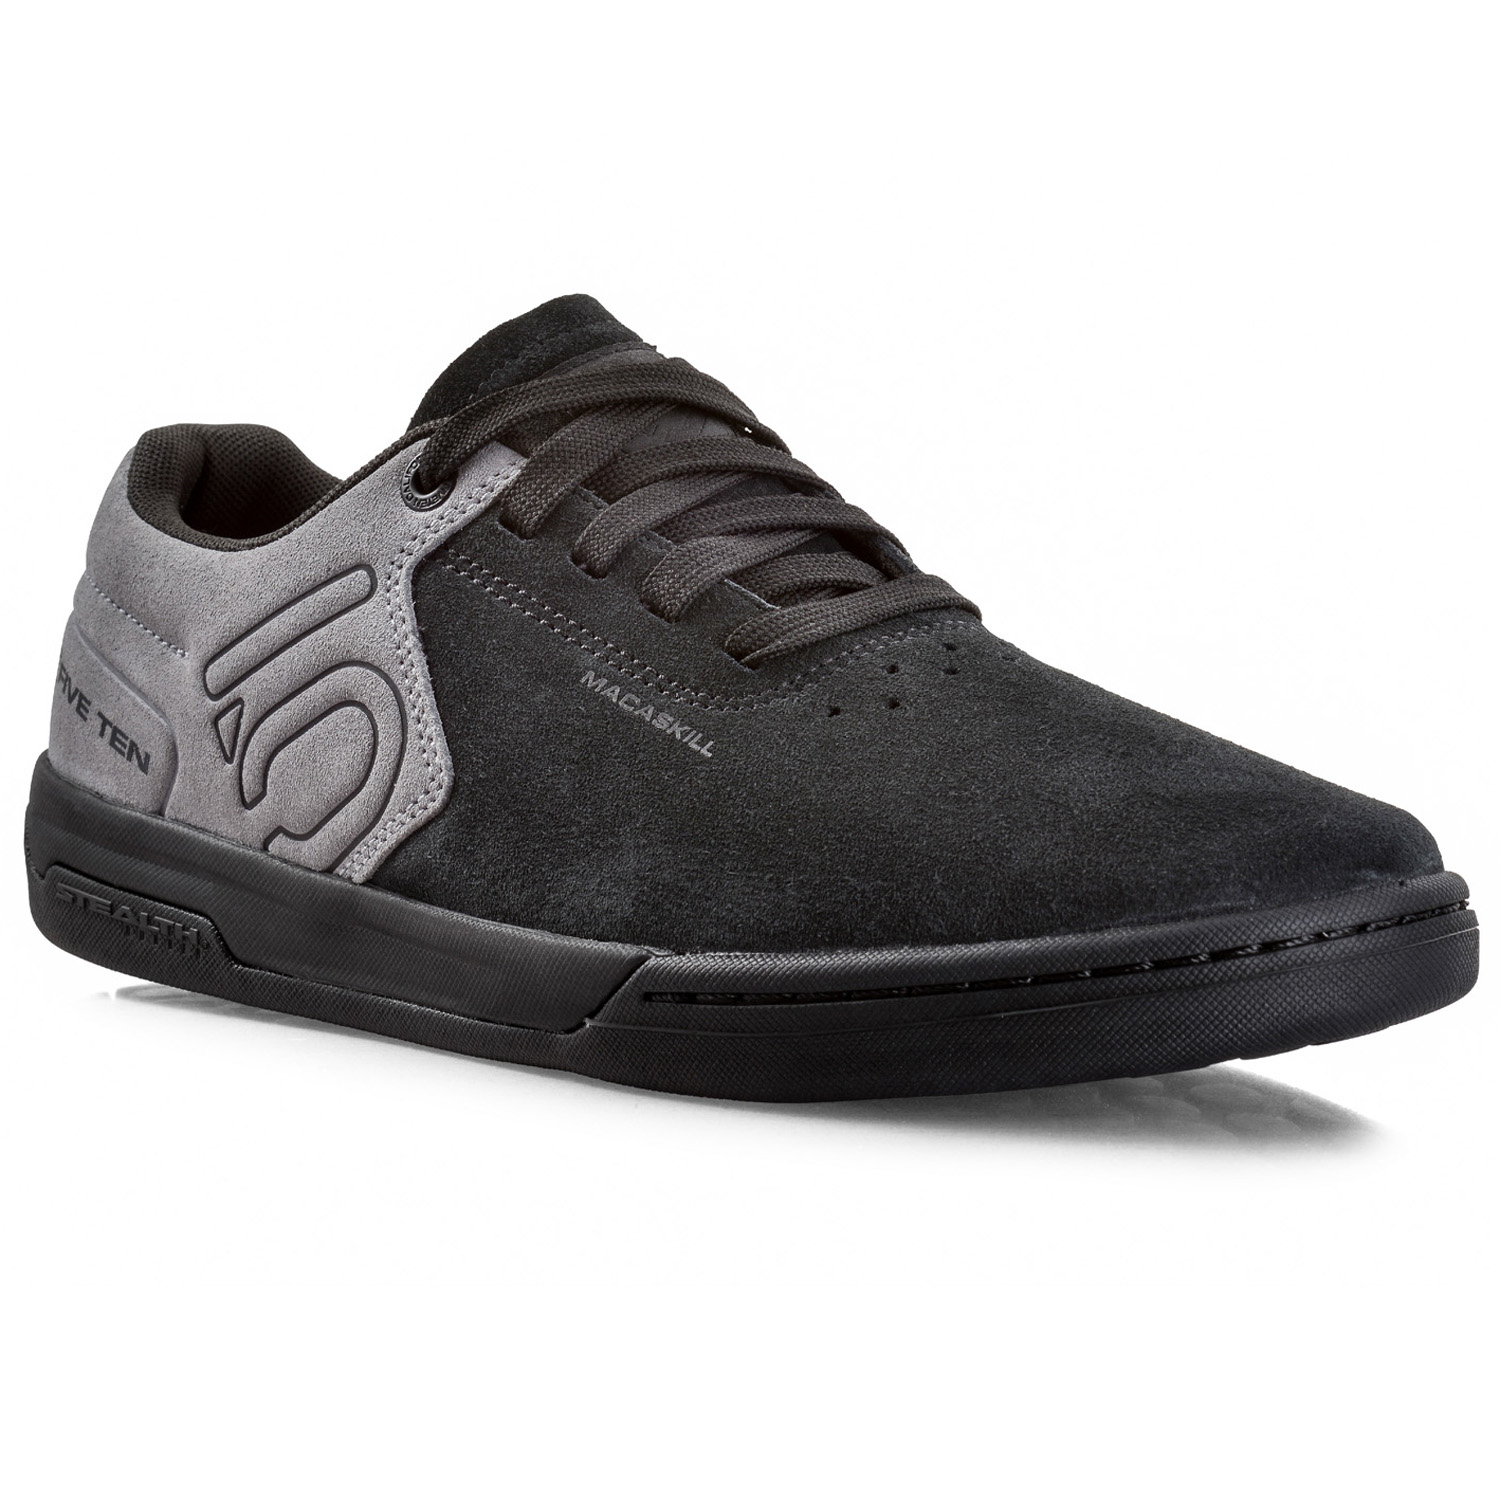 Five Ten Chaussures VTT Danny MacAskill Black/Grey